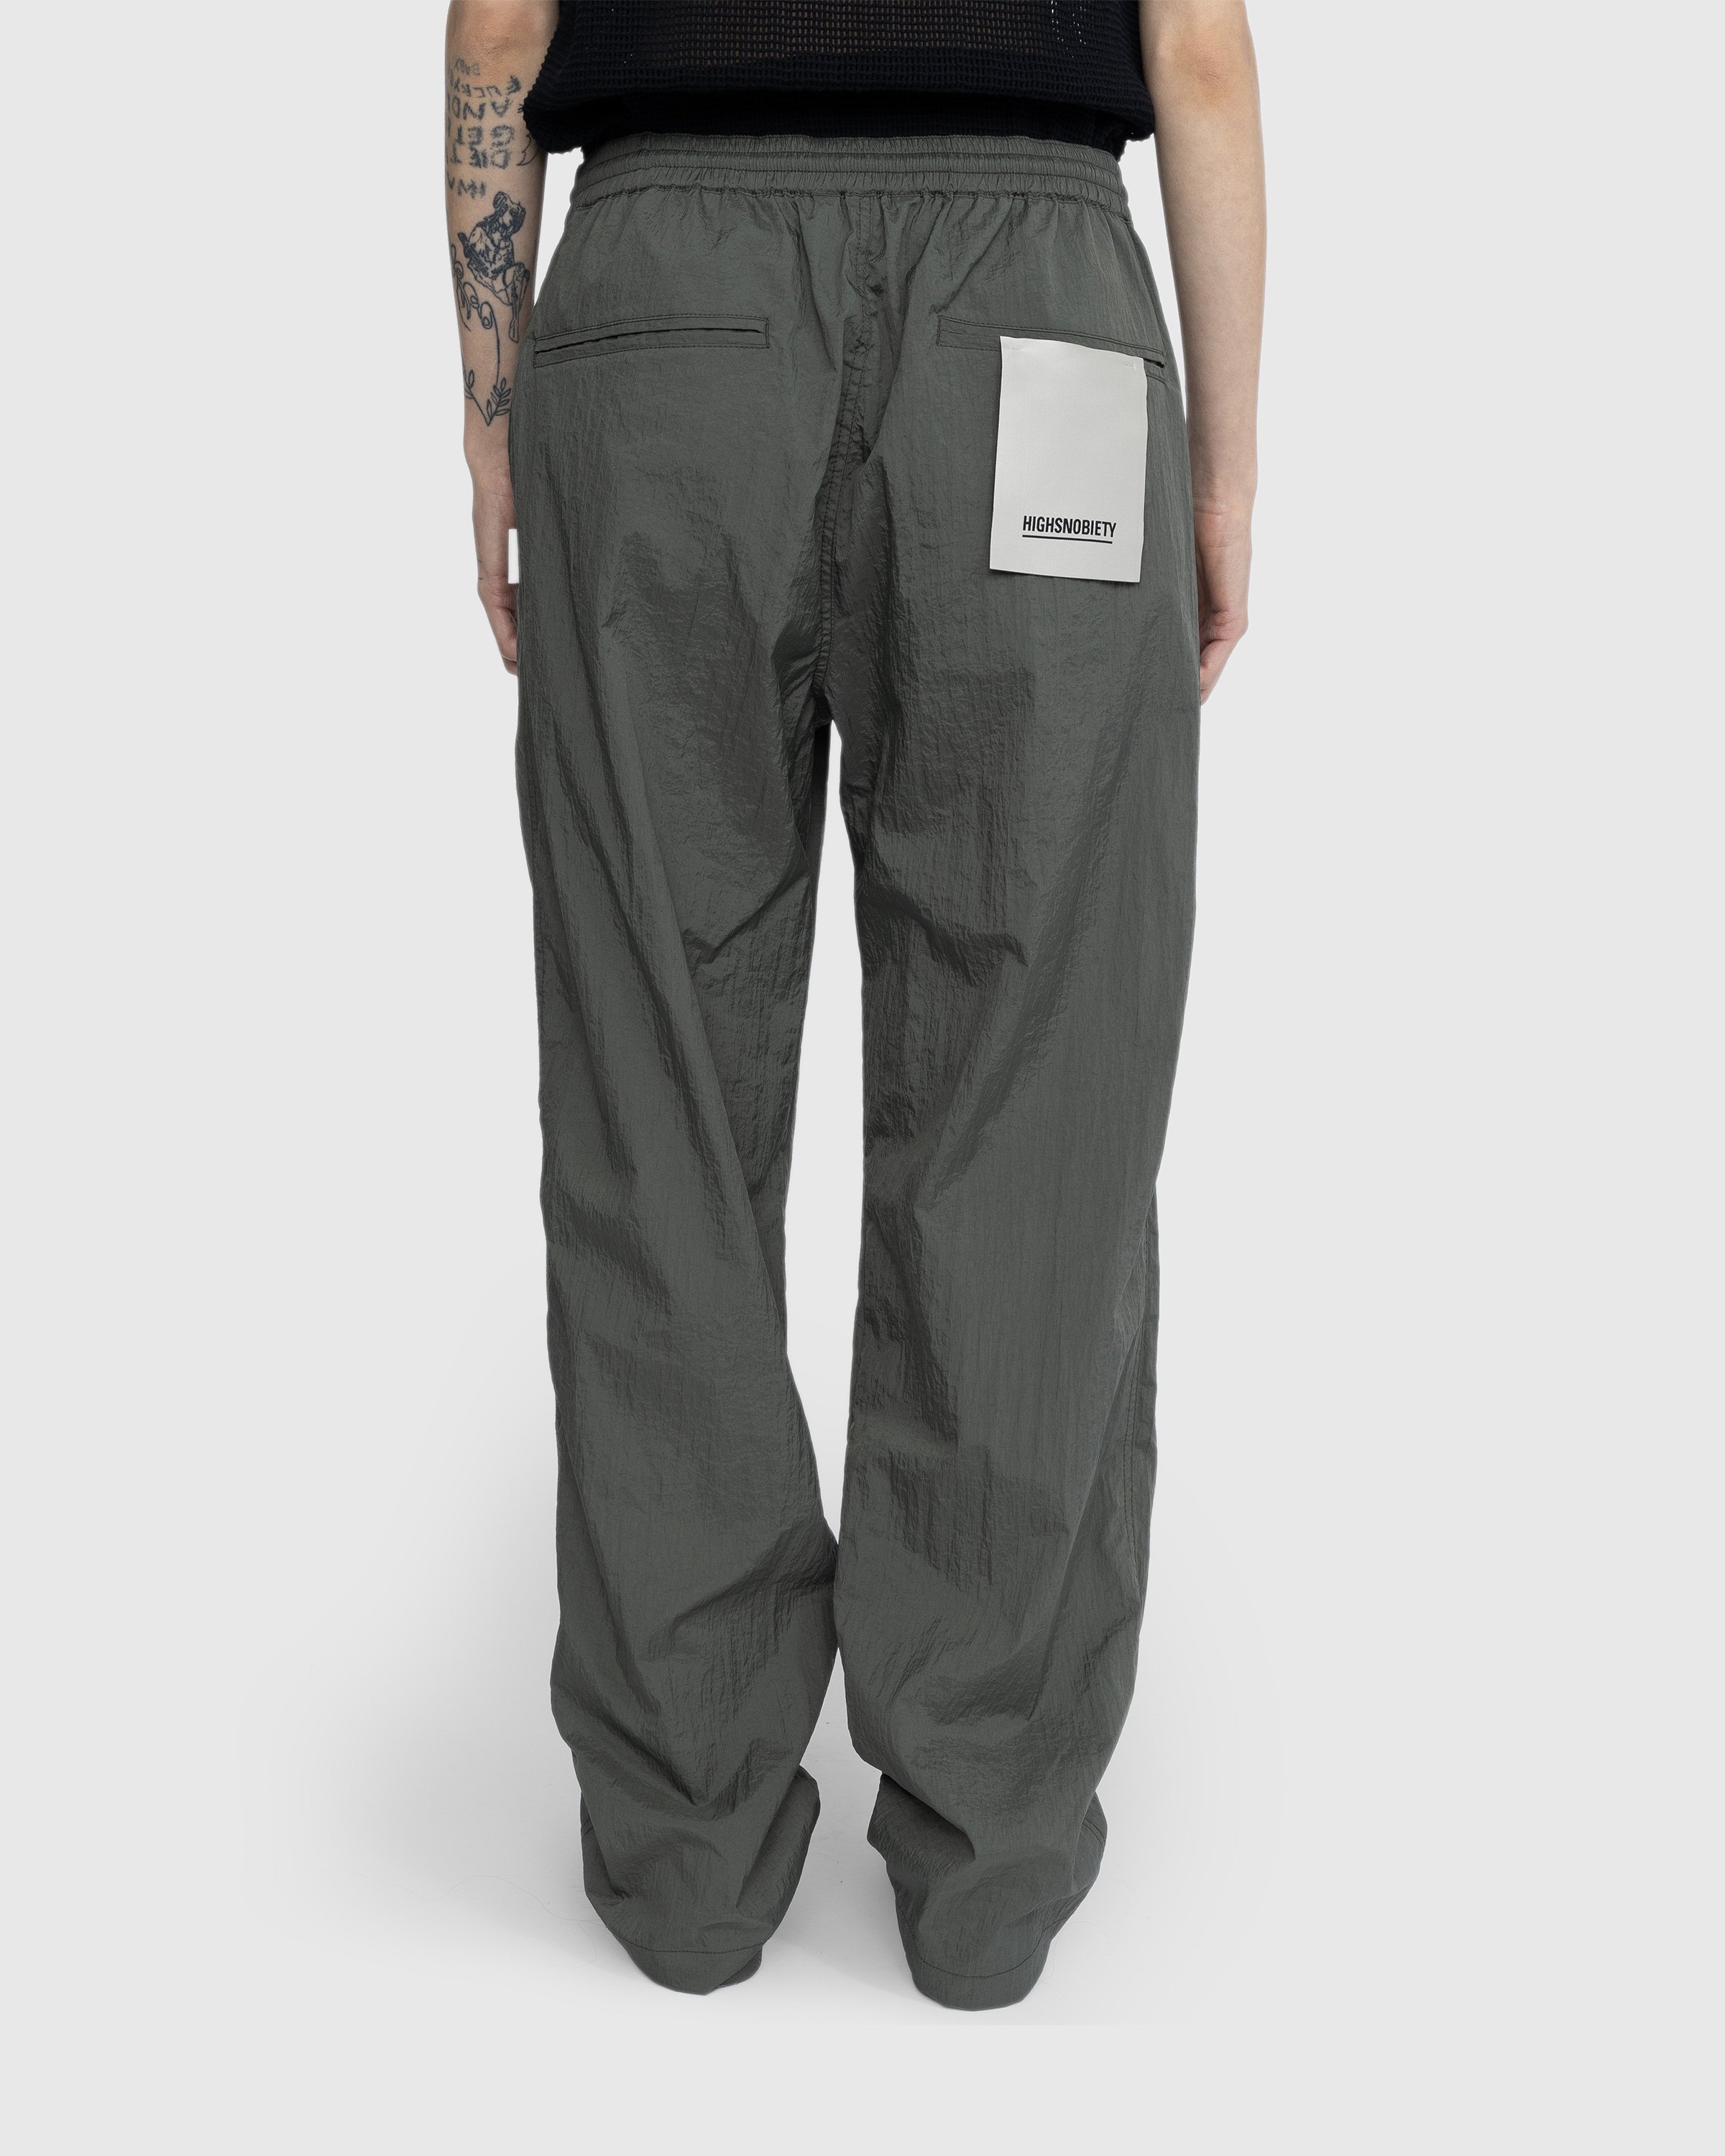 Highsnobiety - Texture Nylon Pants Grey - Clothing - Grey - Image 3